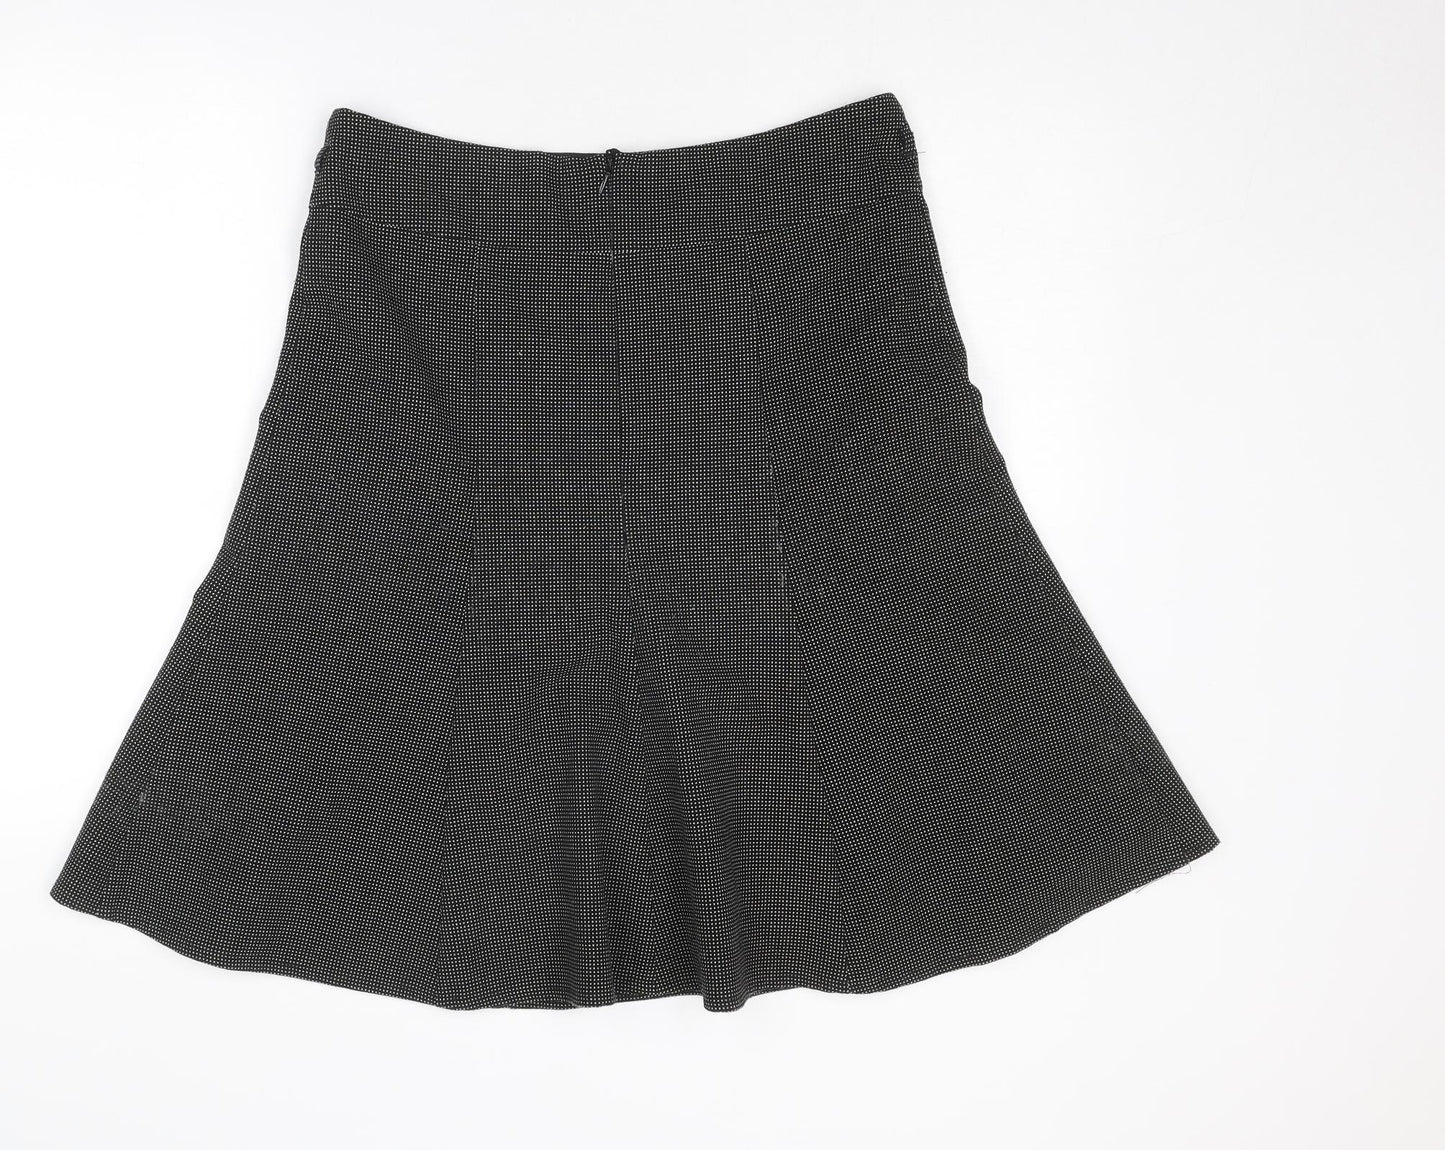 NEXT Womens Black Polka Dot Polyester Swing Skirt Size 14 Zip